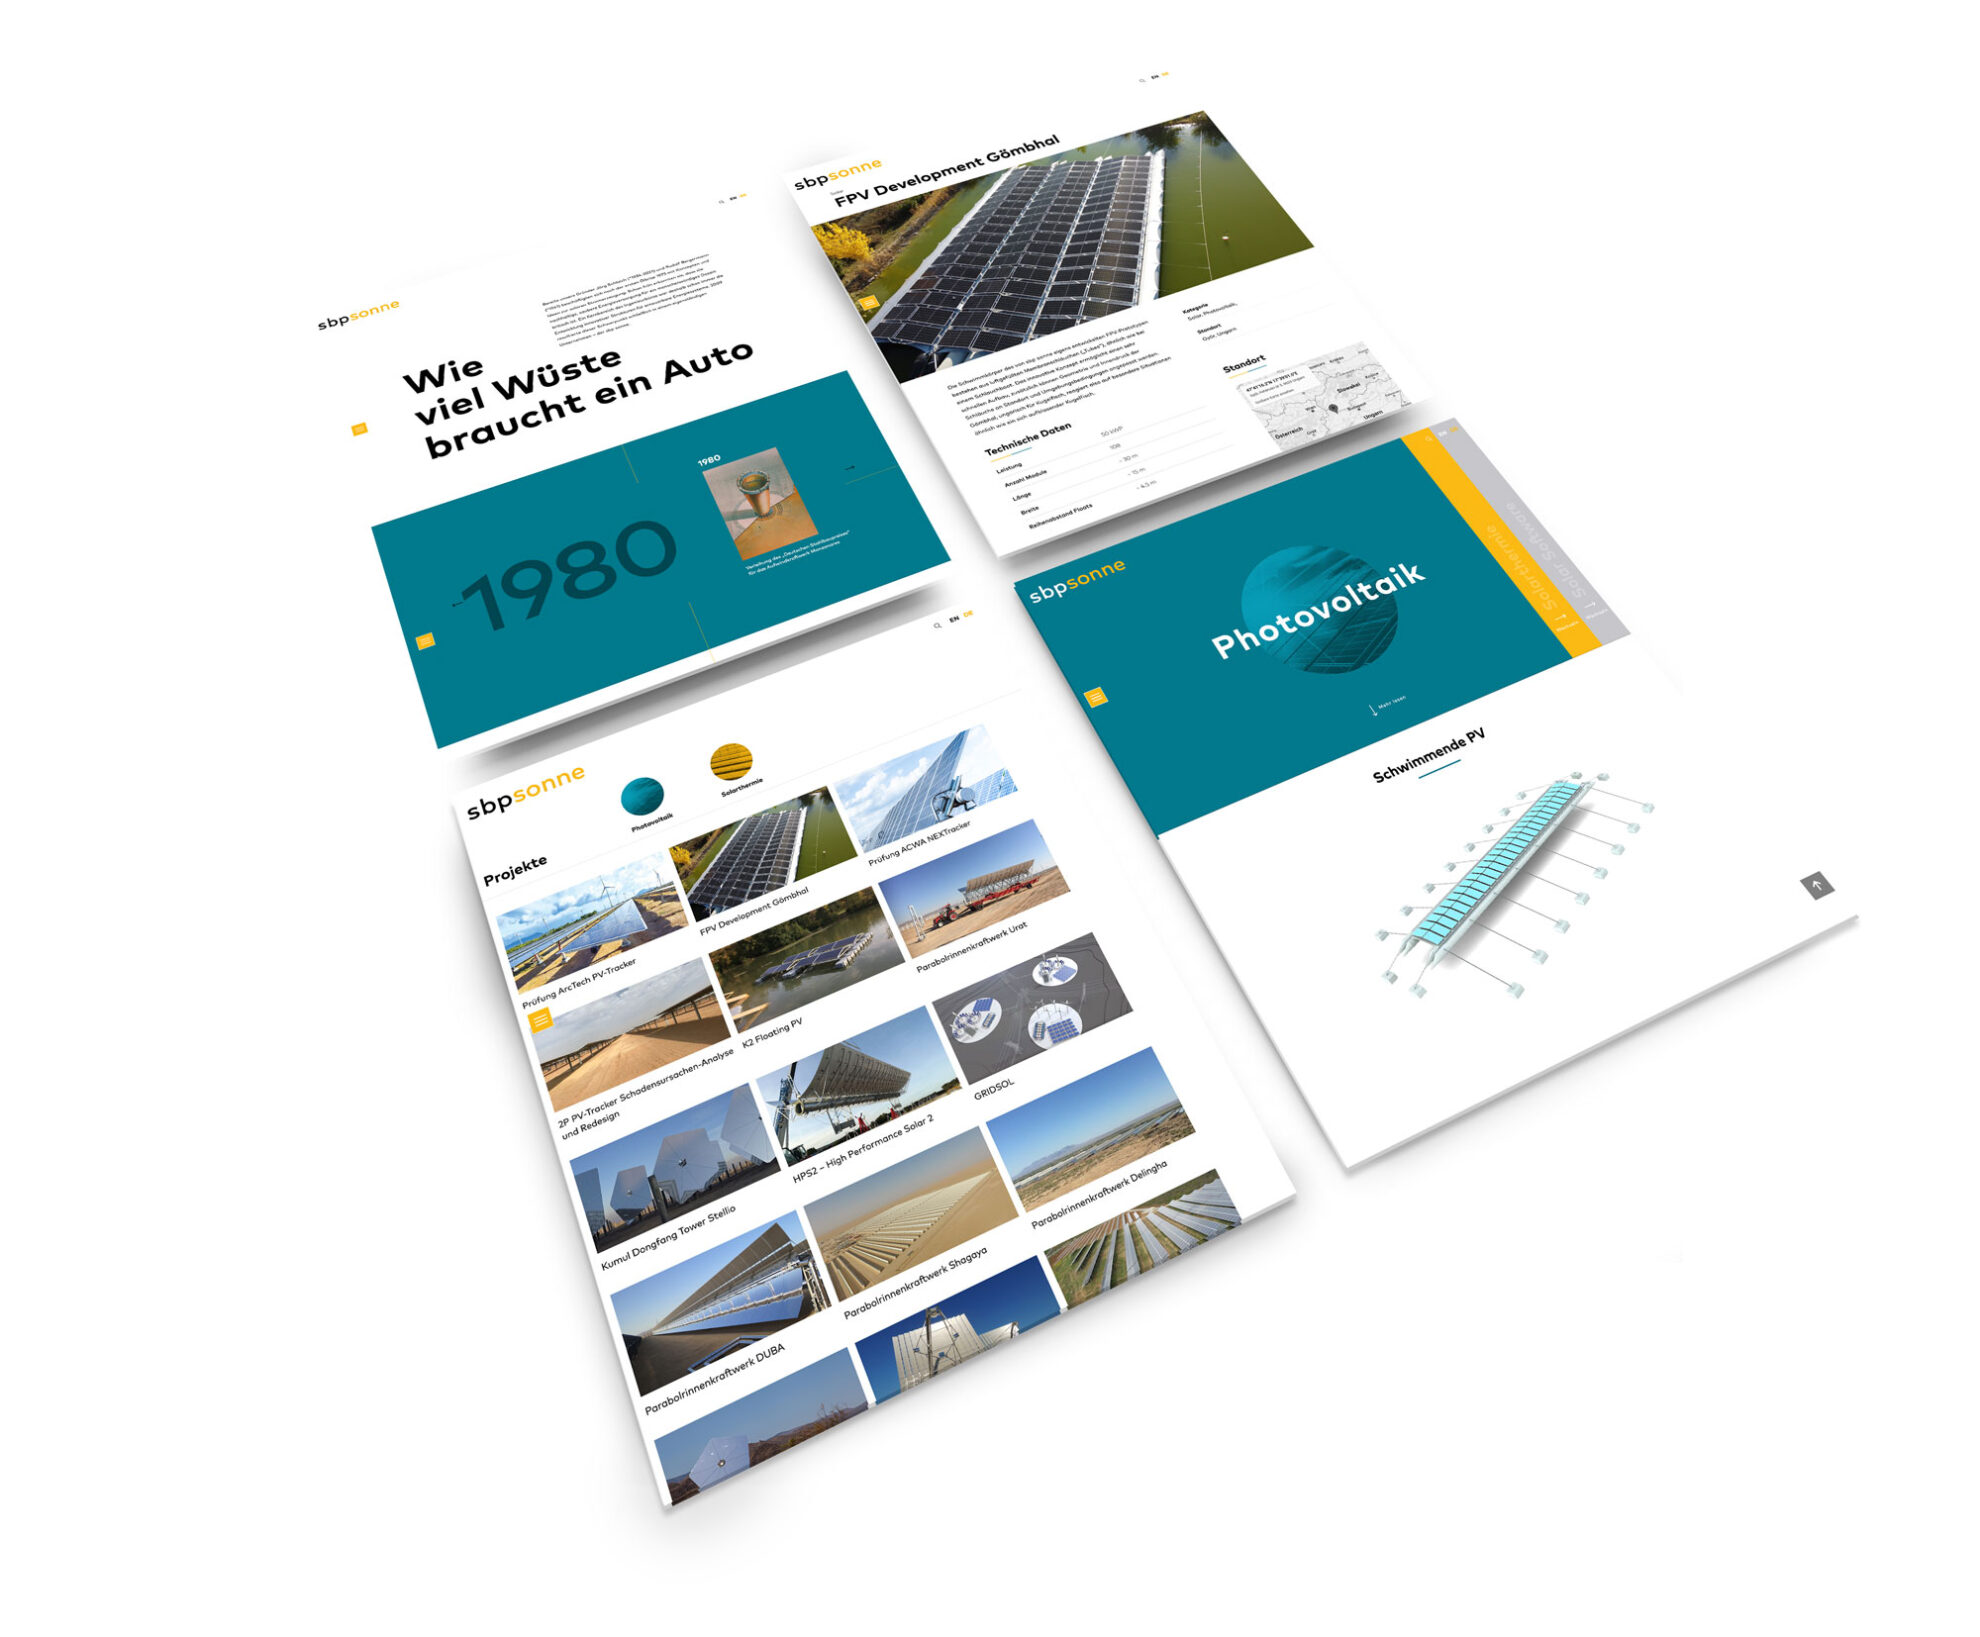 sbp.solar Website Relaunch | Yearning